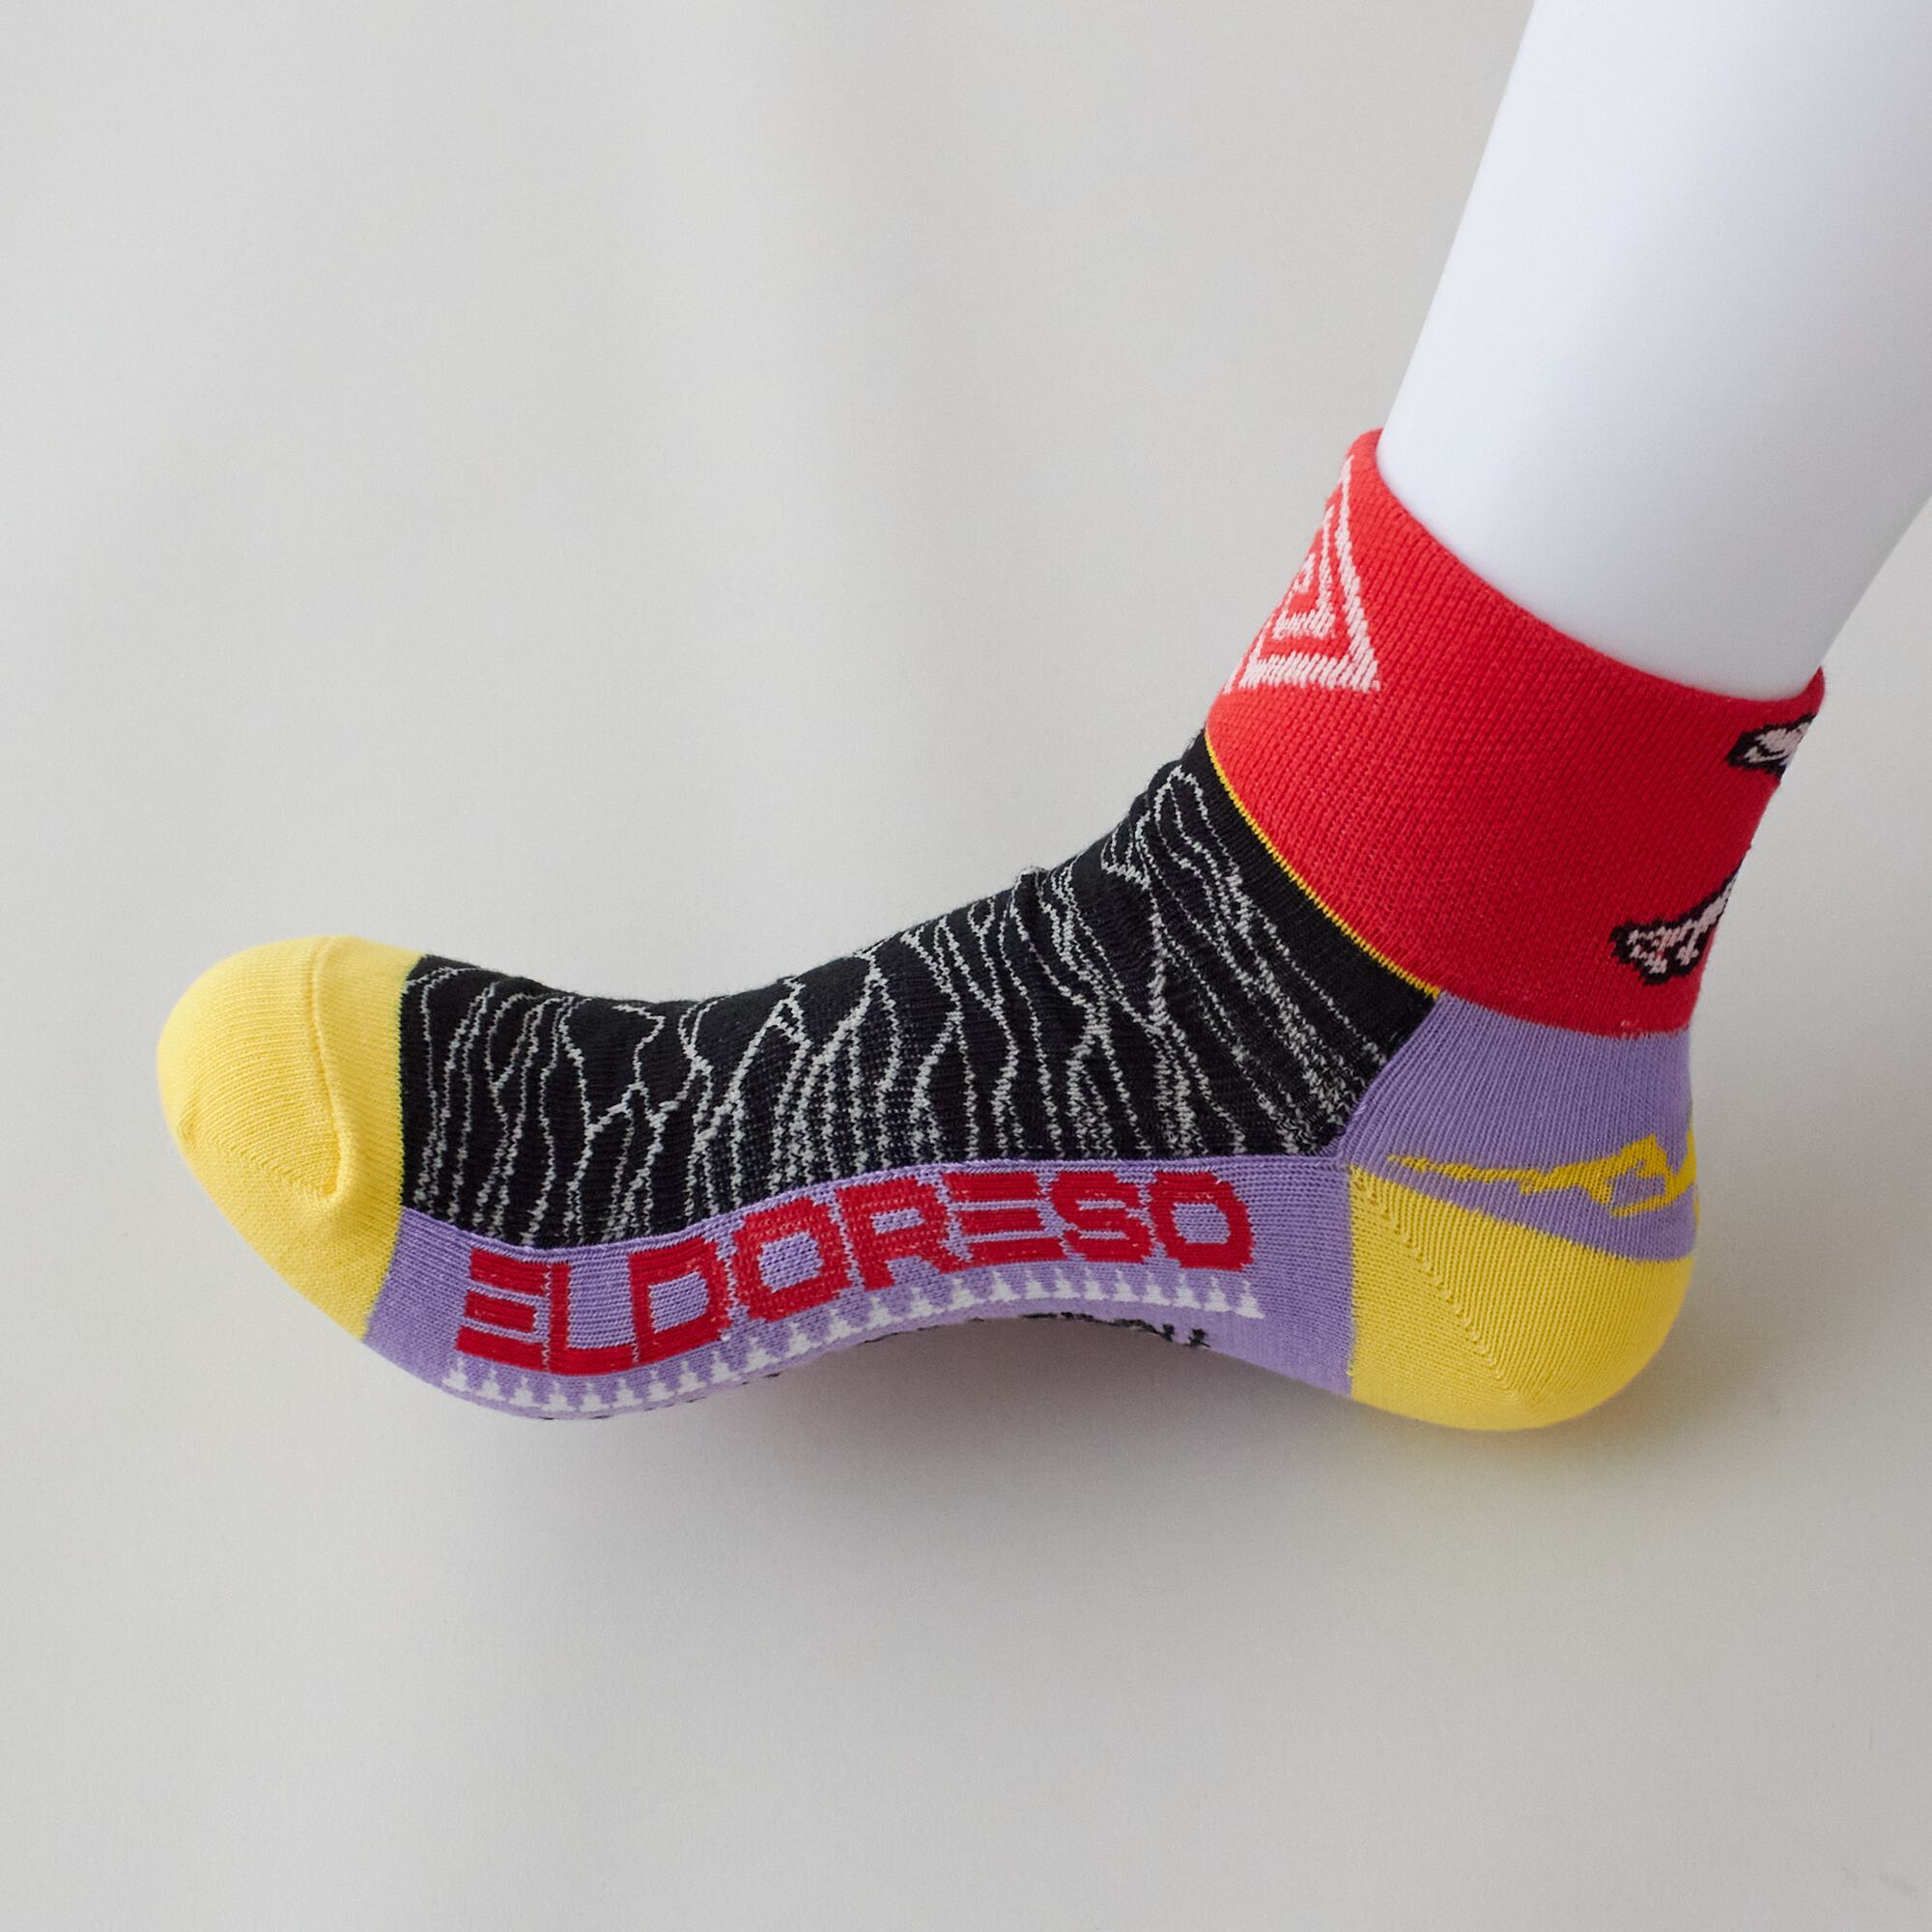 ELDORESO(エルドレッソ)Pleasures Socks(Red)ランニングソックス